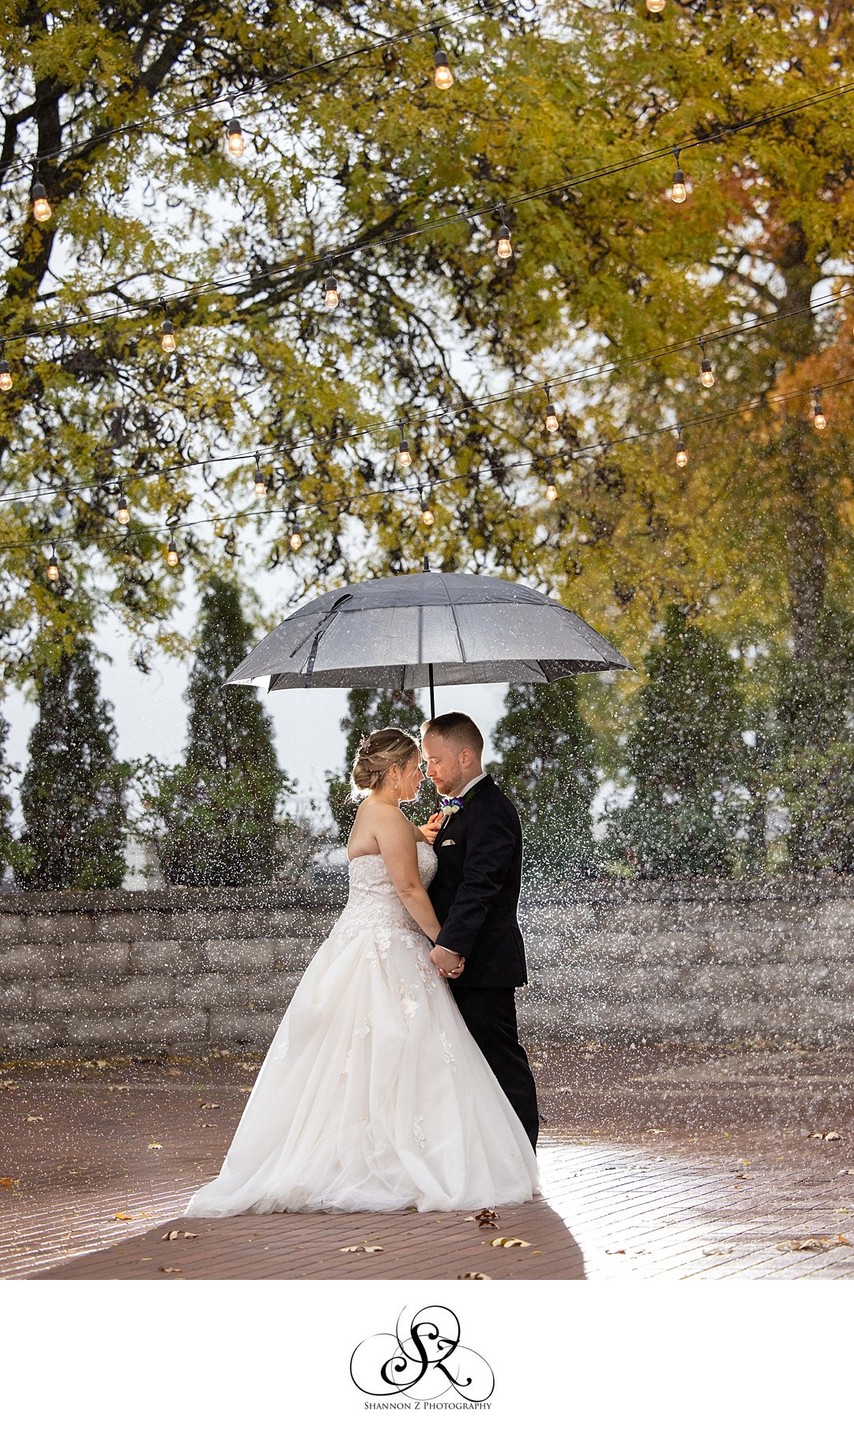 Rain: Wedding Photo